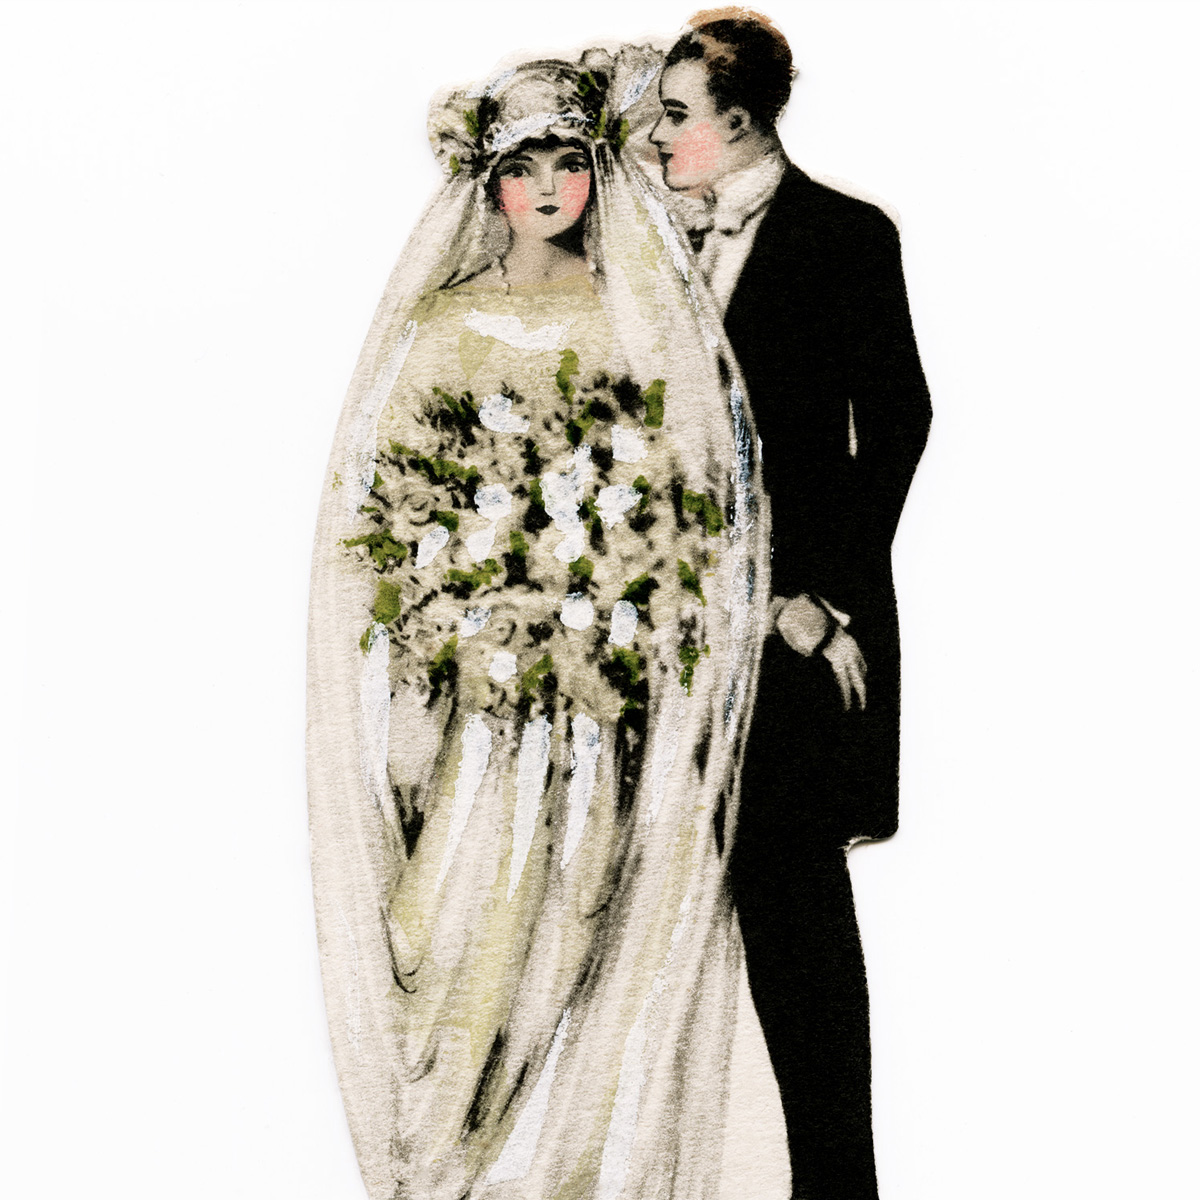 vintage wedding dress clip art